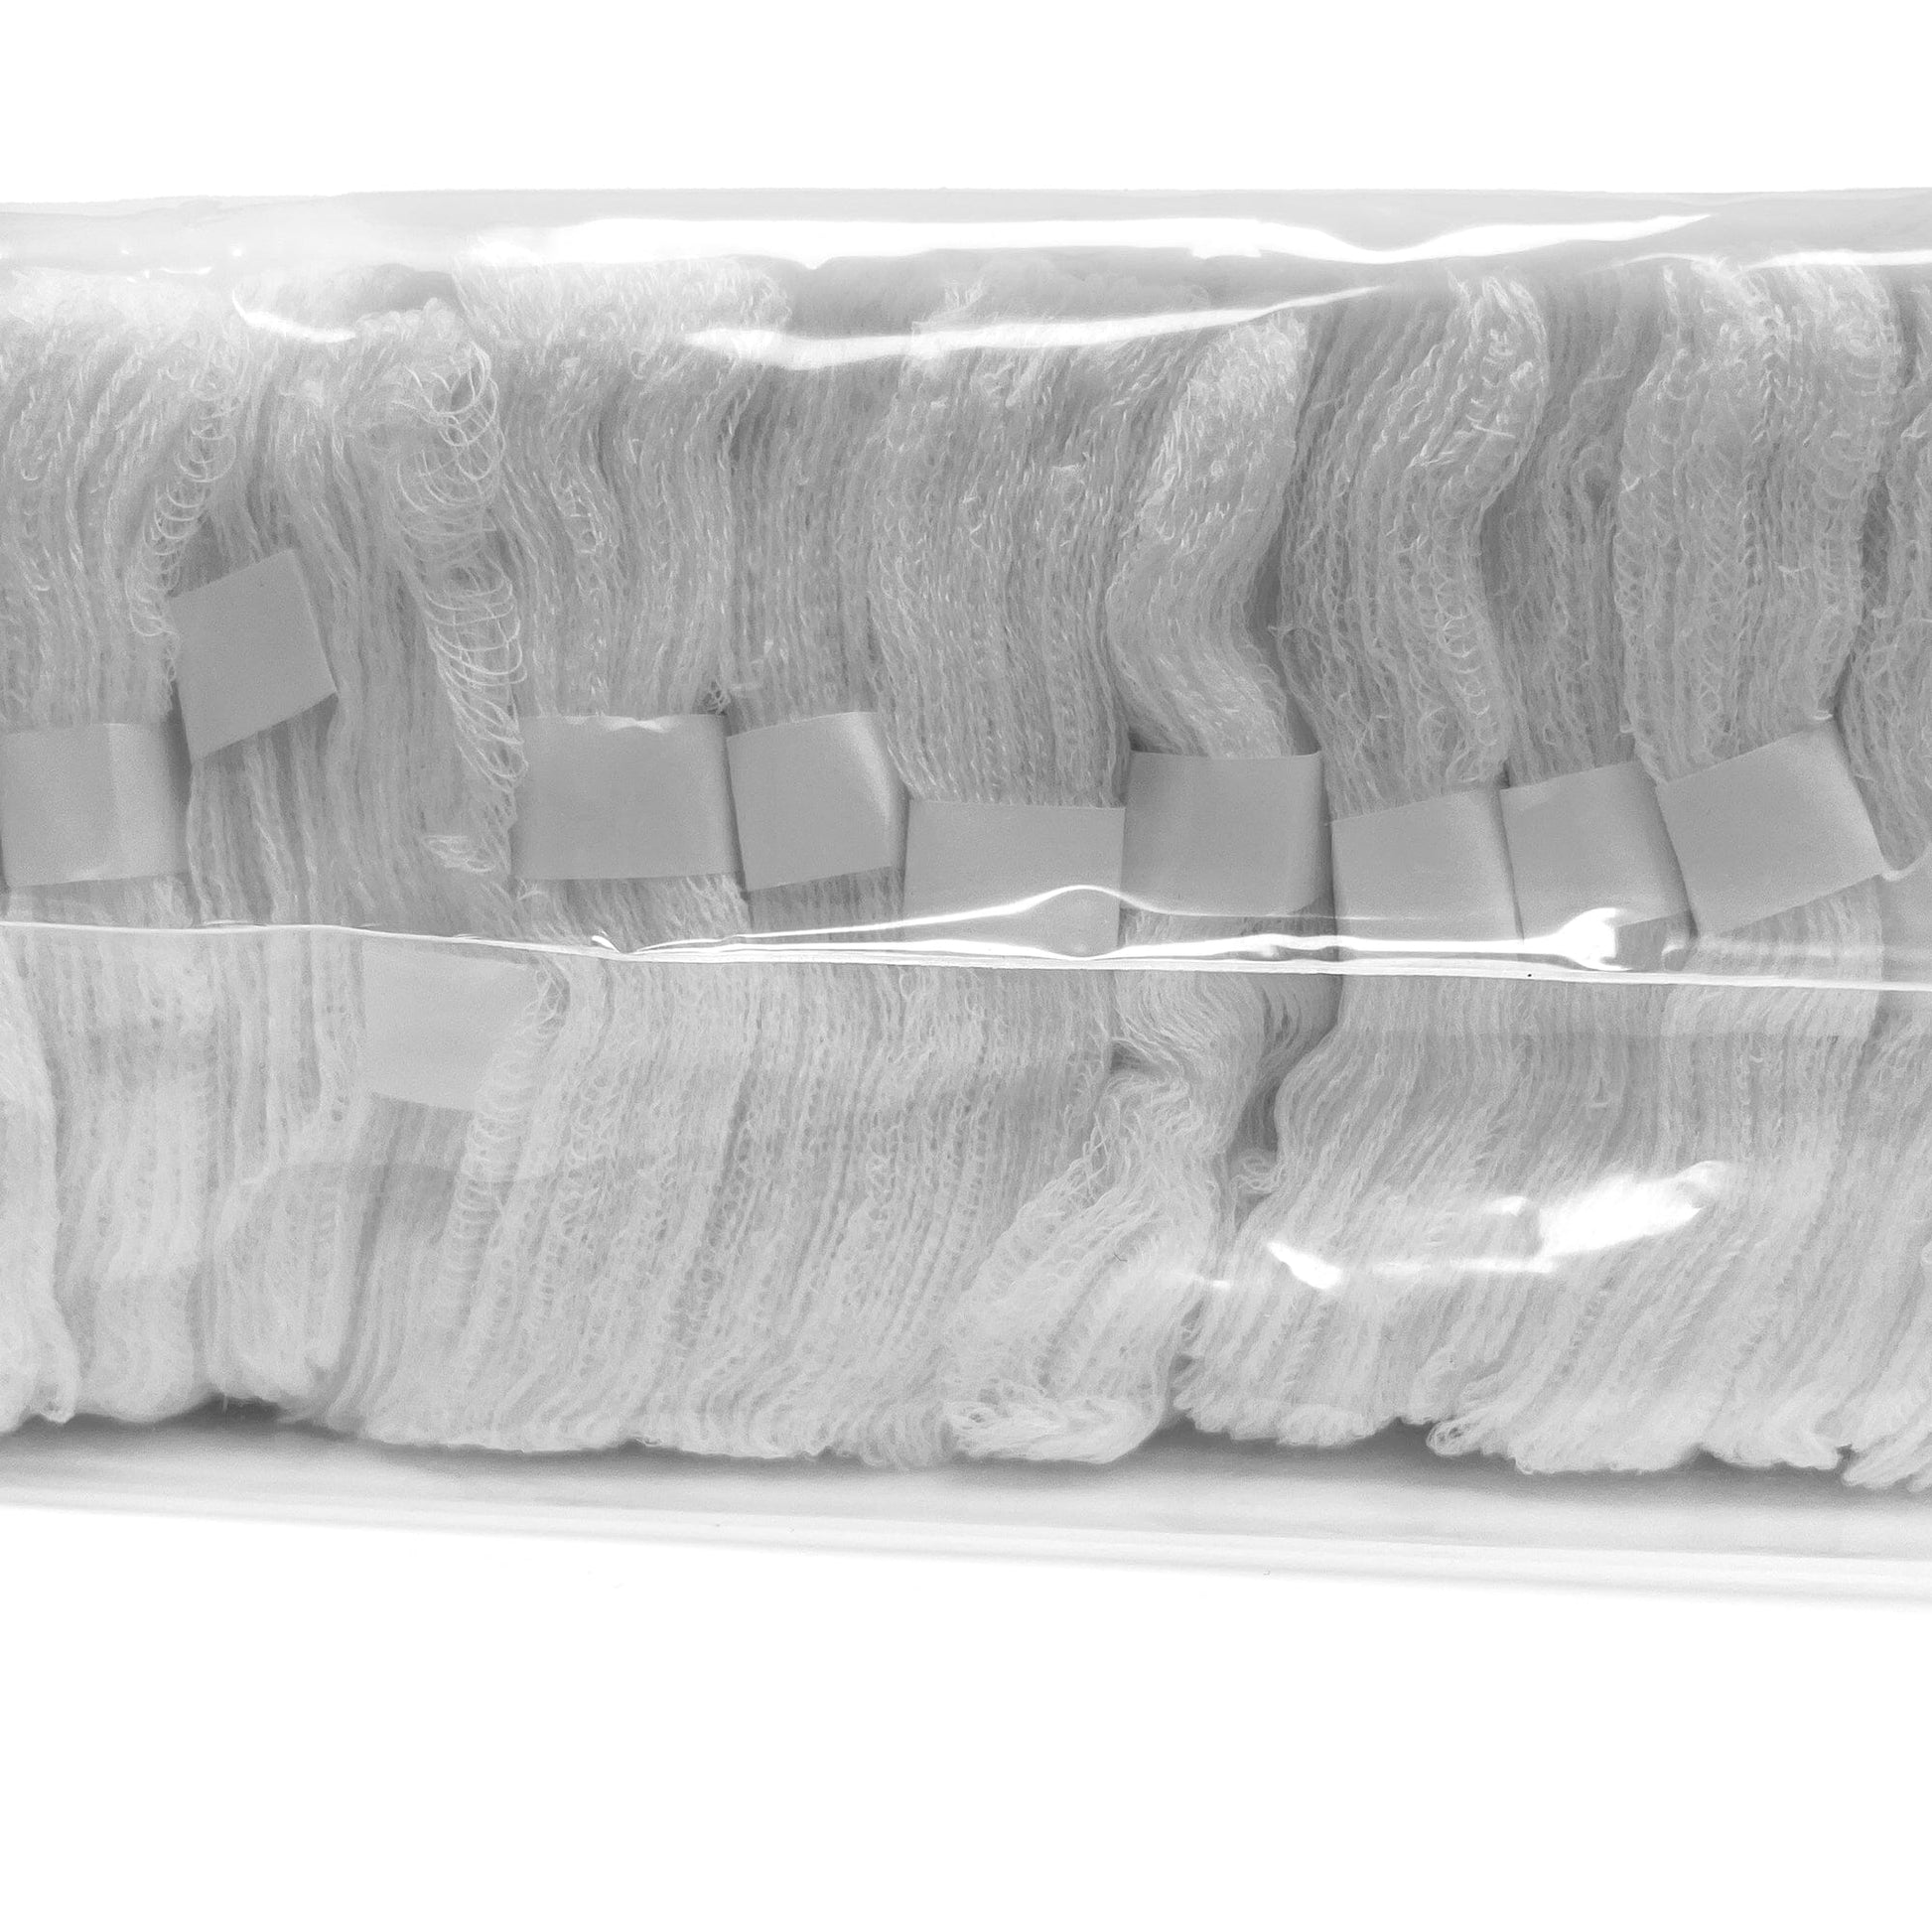 4" x 4" Gauze Pads | 200 12-ply | 100% Cotton | 75063 | GRAHAM BEAUTY Towels GRAHAM BEAUTY 